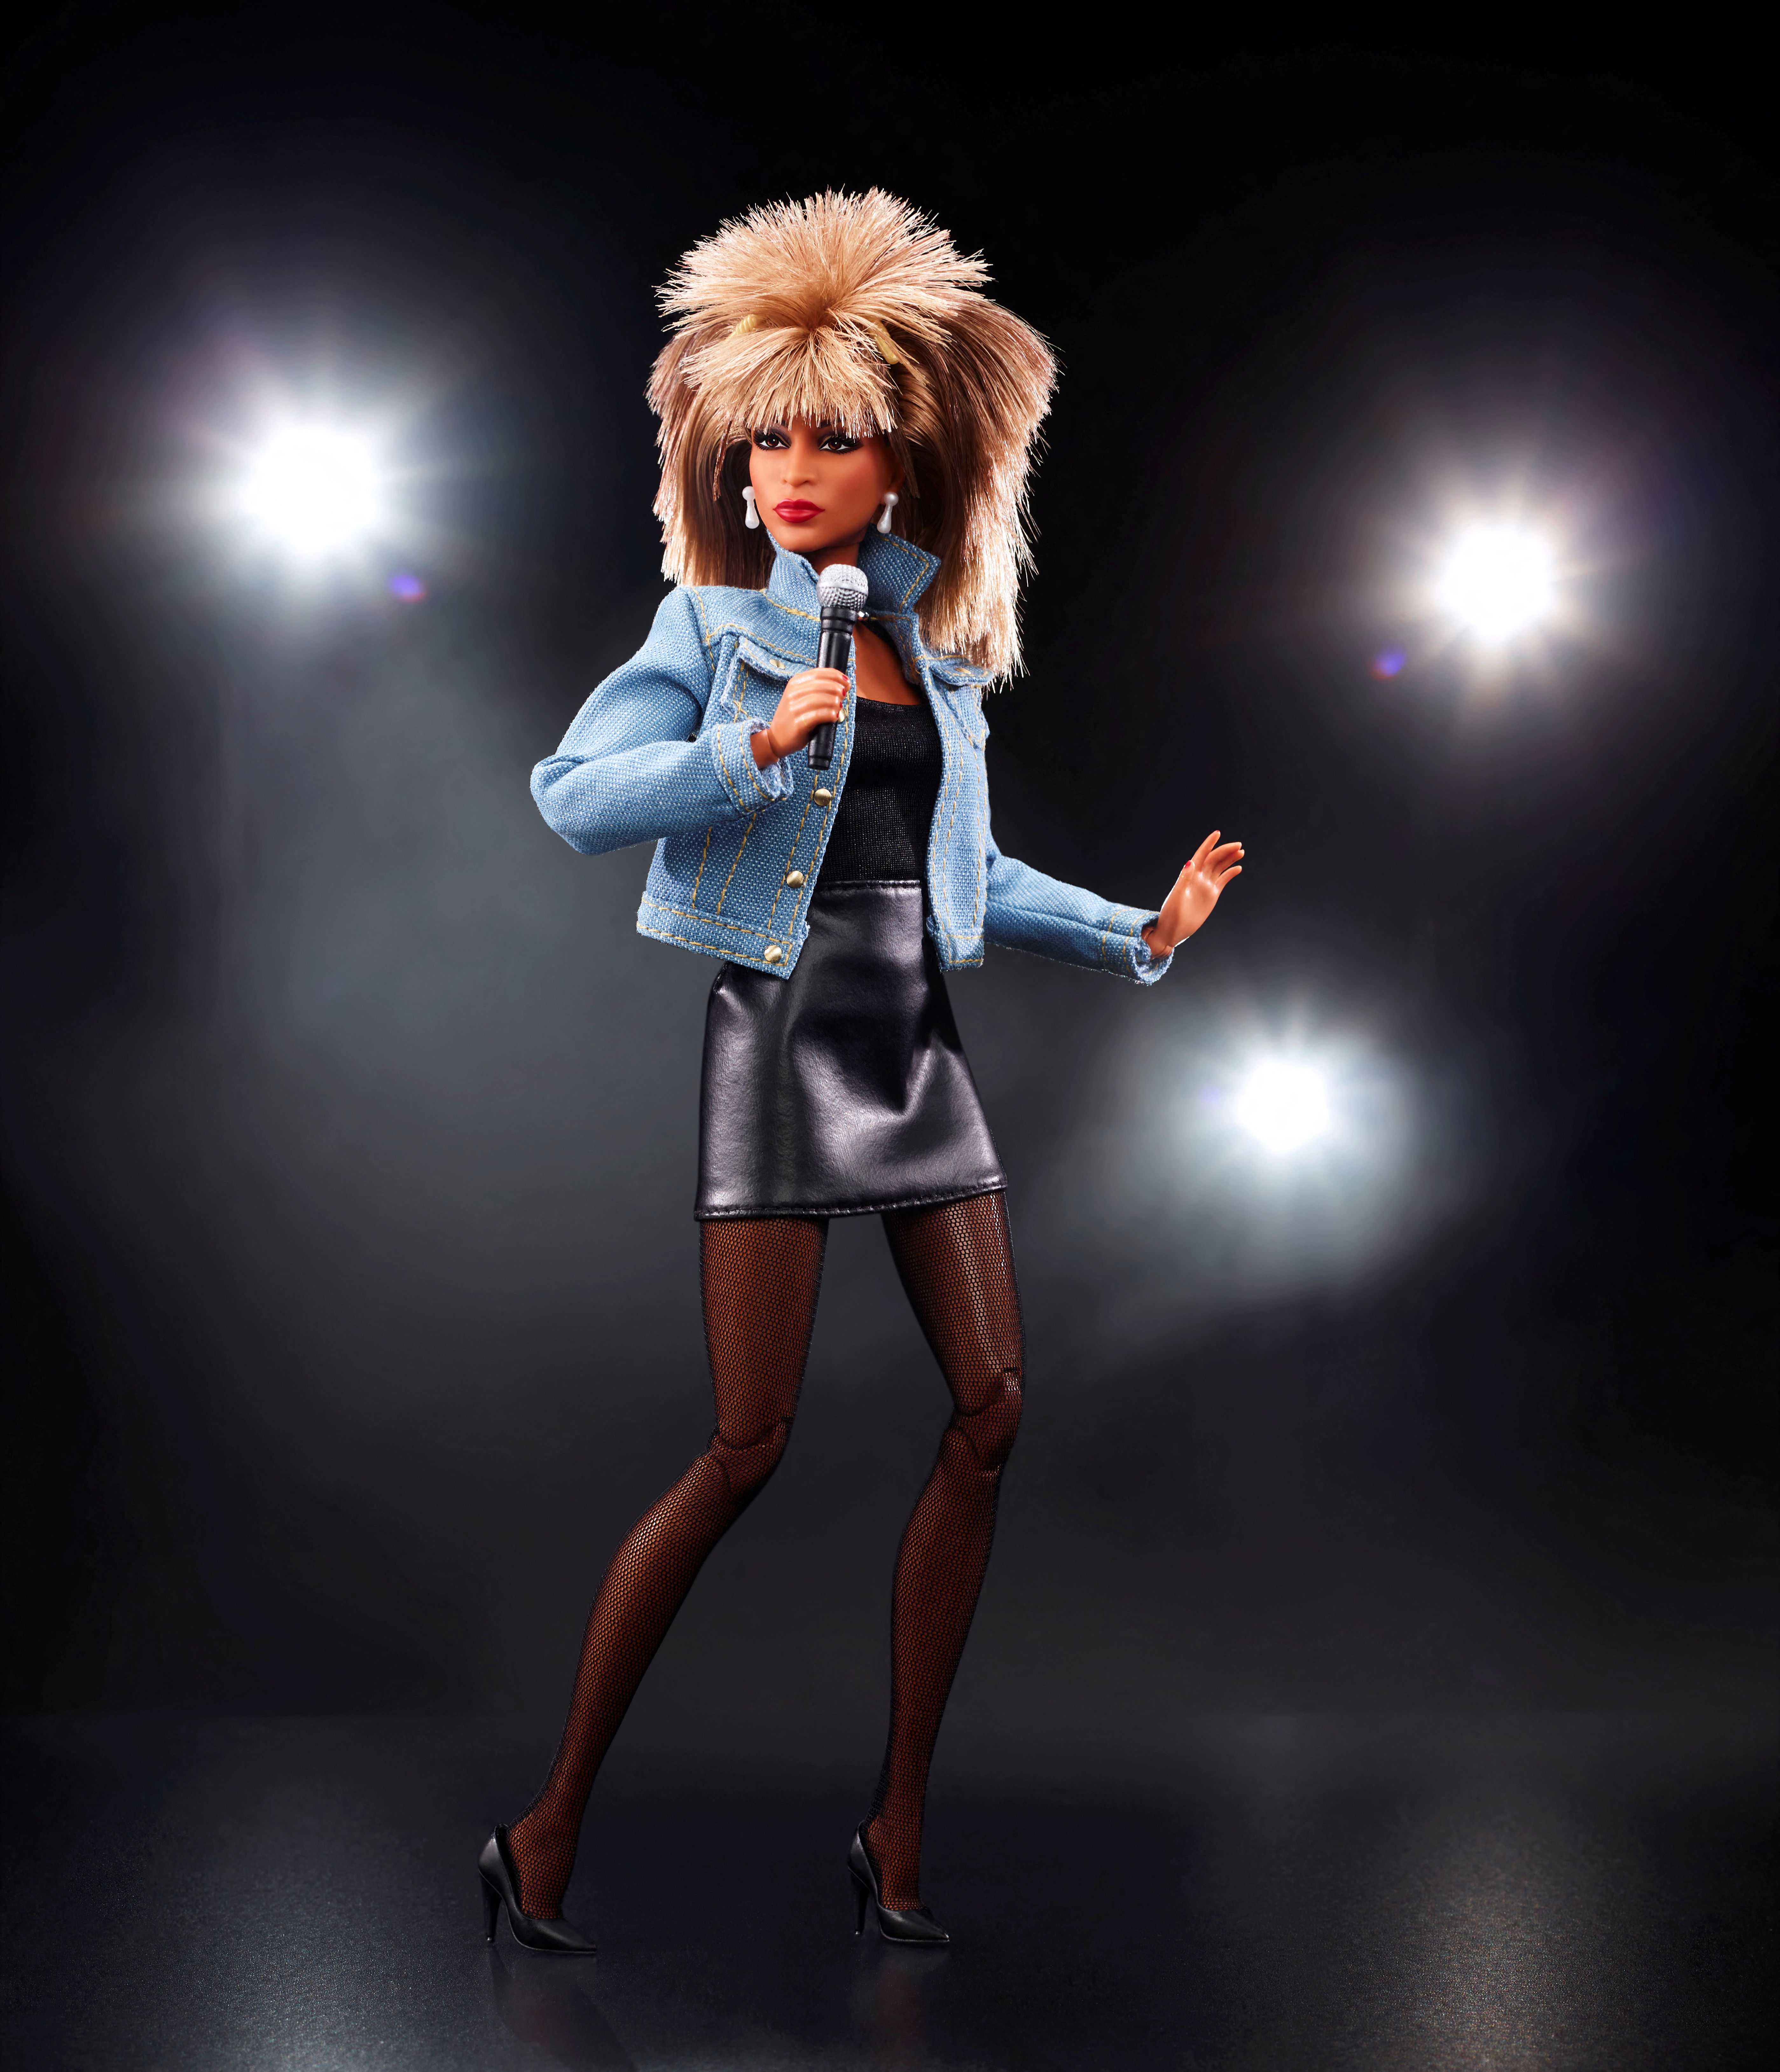 La imagen de Tina Turner en "What's Love Got To Do With It" fue tan emblemática que Mattel lanzó una Barbie inspirada en el conjunto que utilizó en el video musical

REUTERS